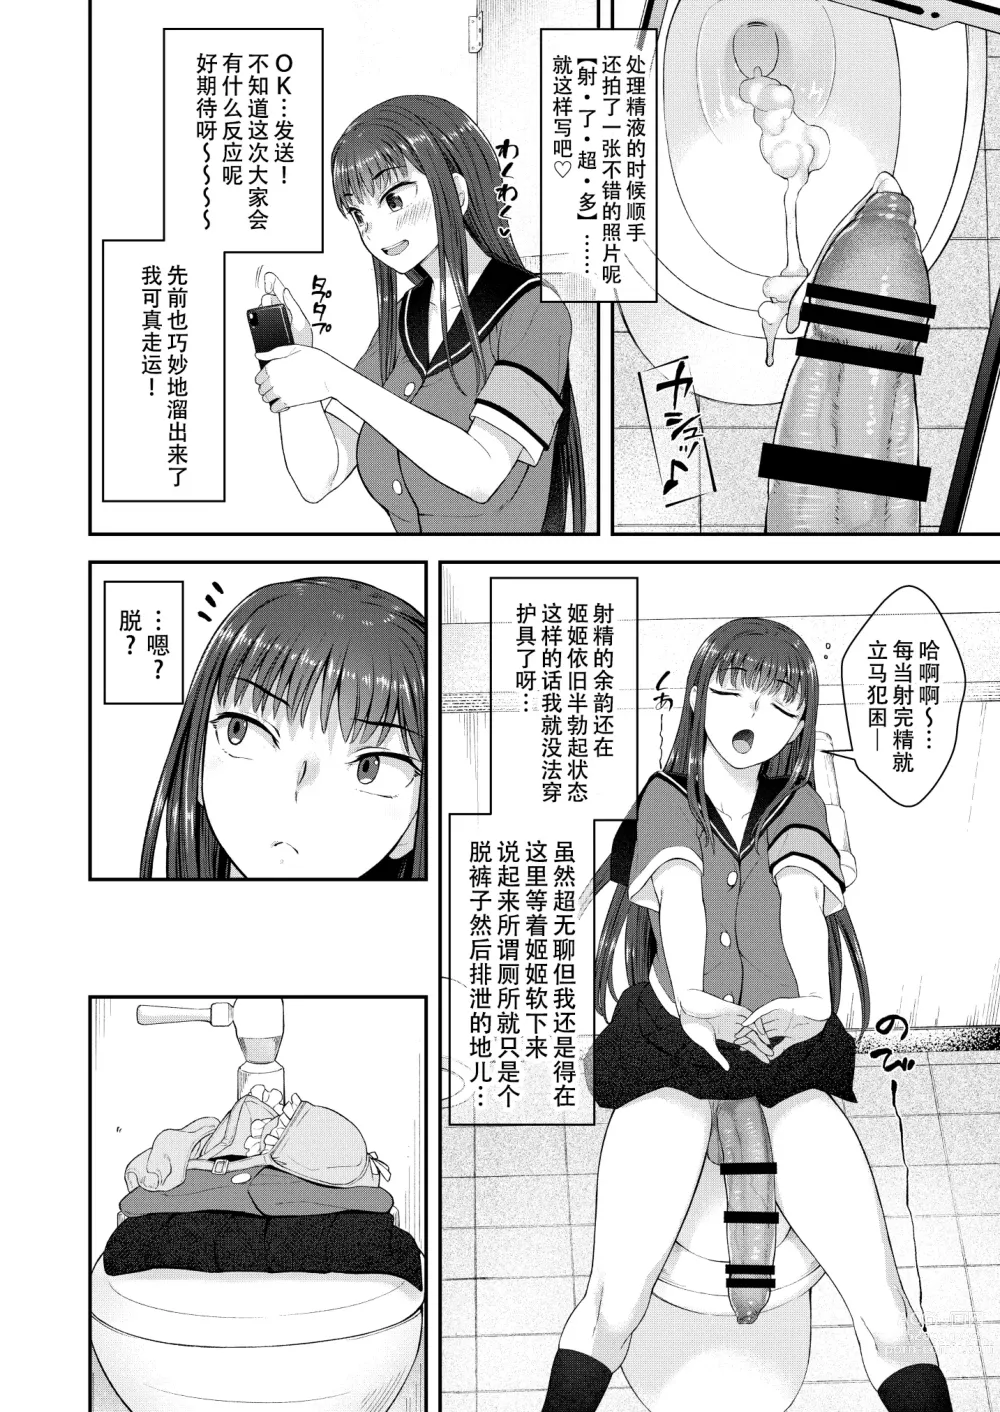 Page 12 of doujinshi 放课后的自拍少女2 那个露出男性性器并且自拍的变态只有她知道其真面目.